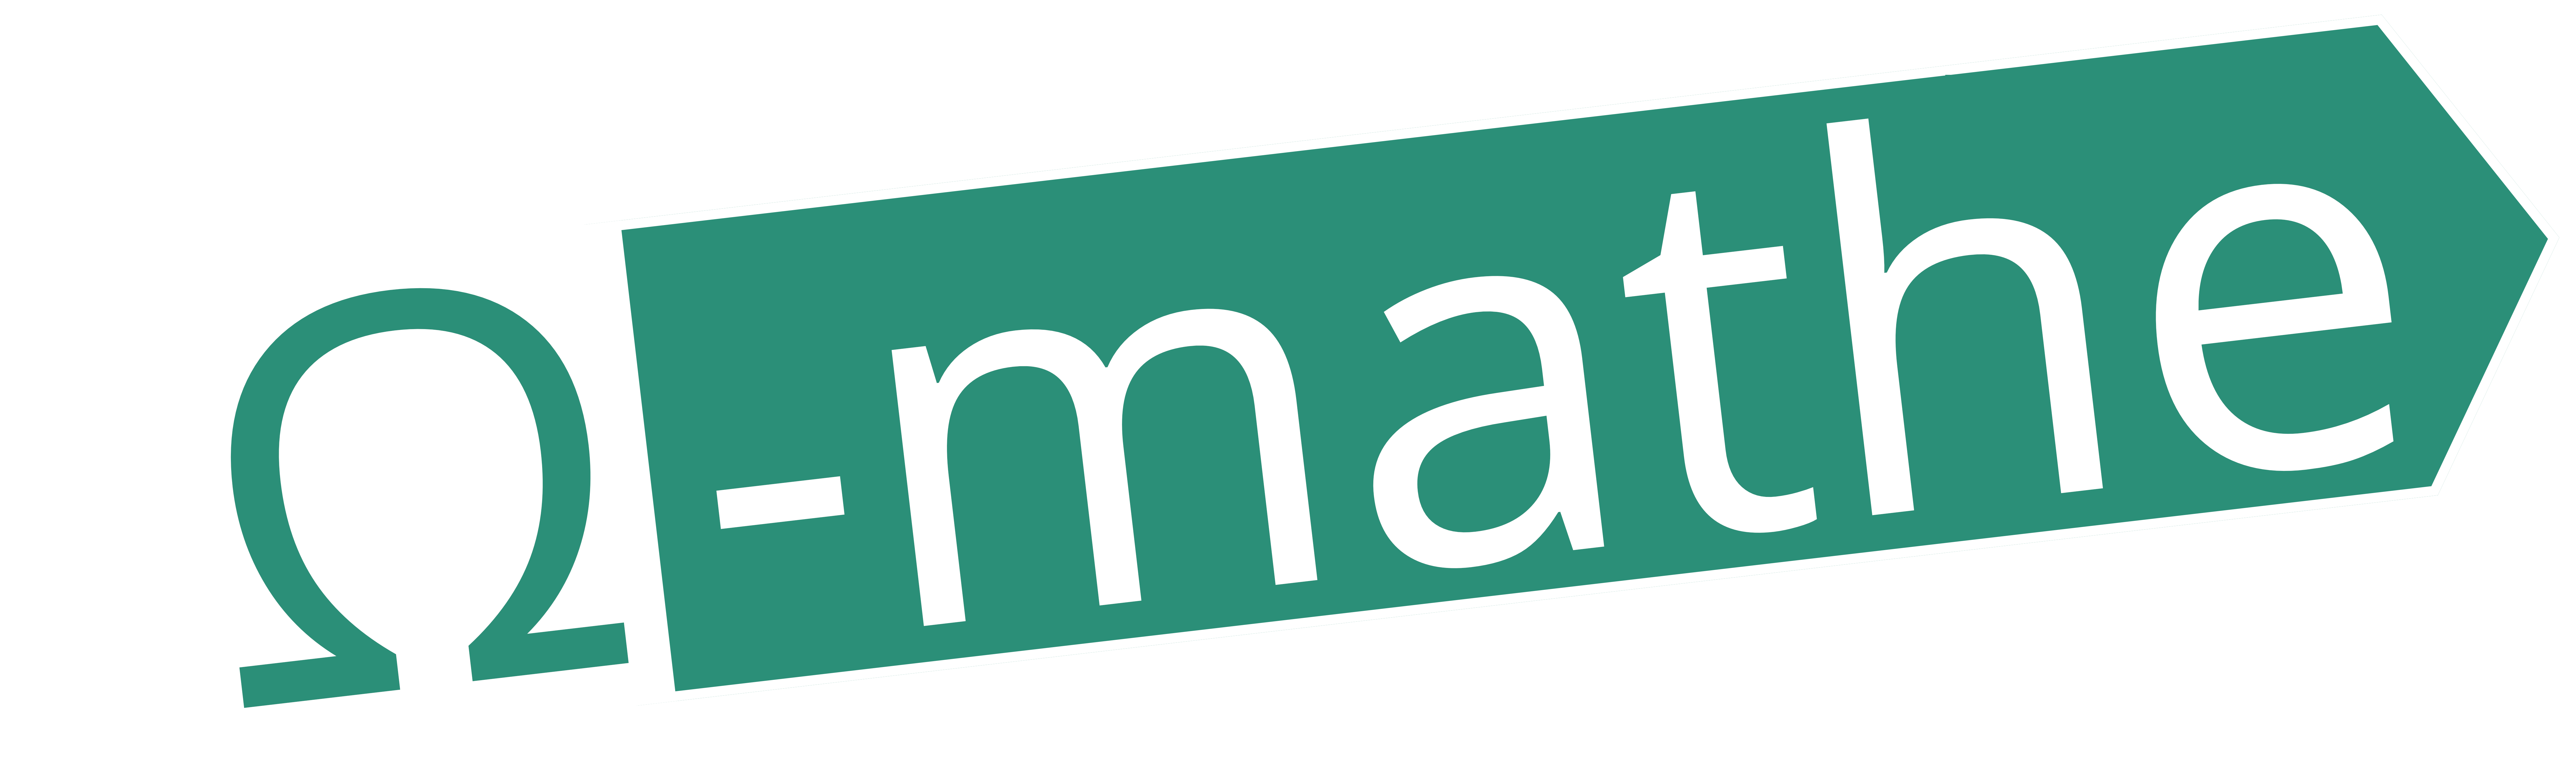 Das Logo des digitalen Mathematikbuchs o-mathe.de.